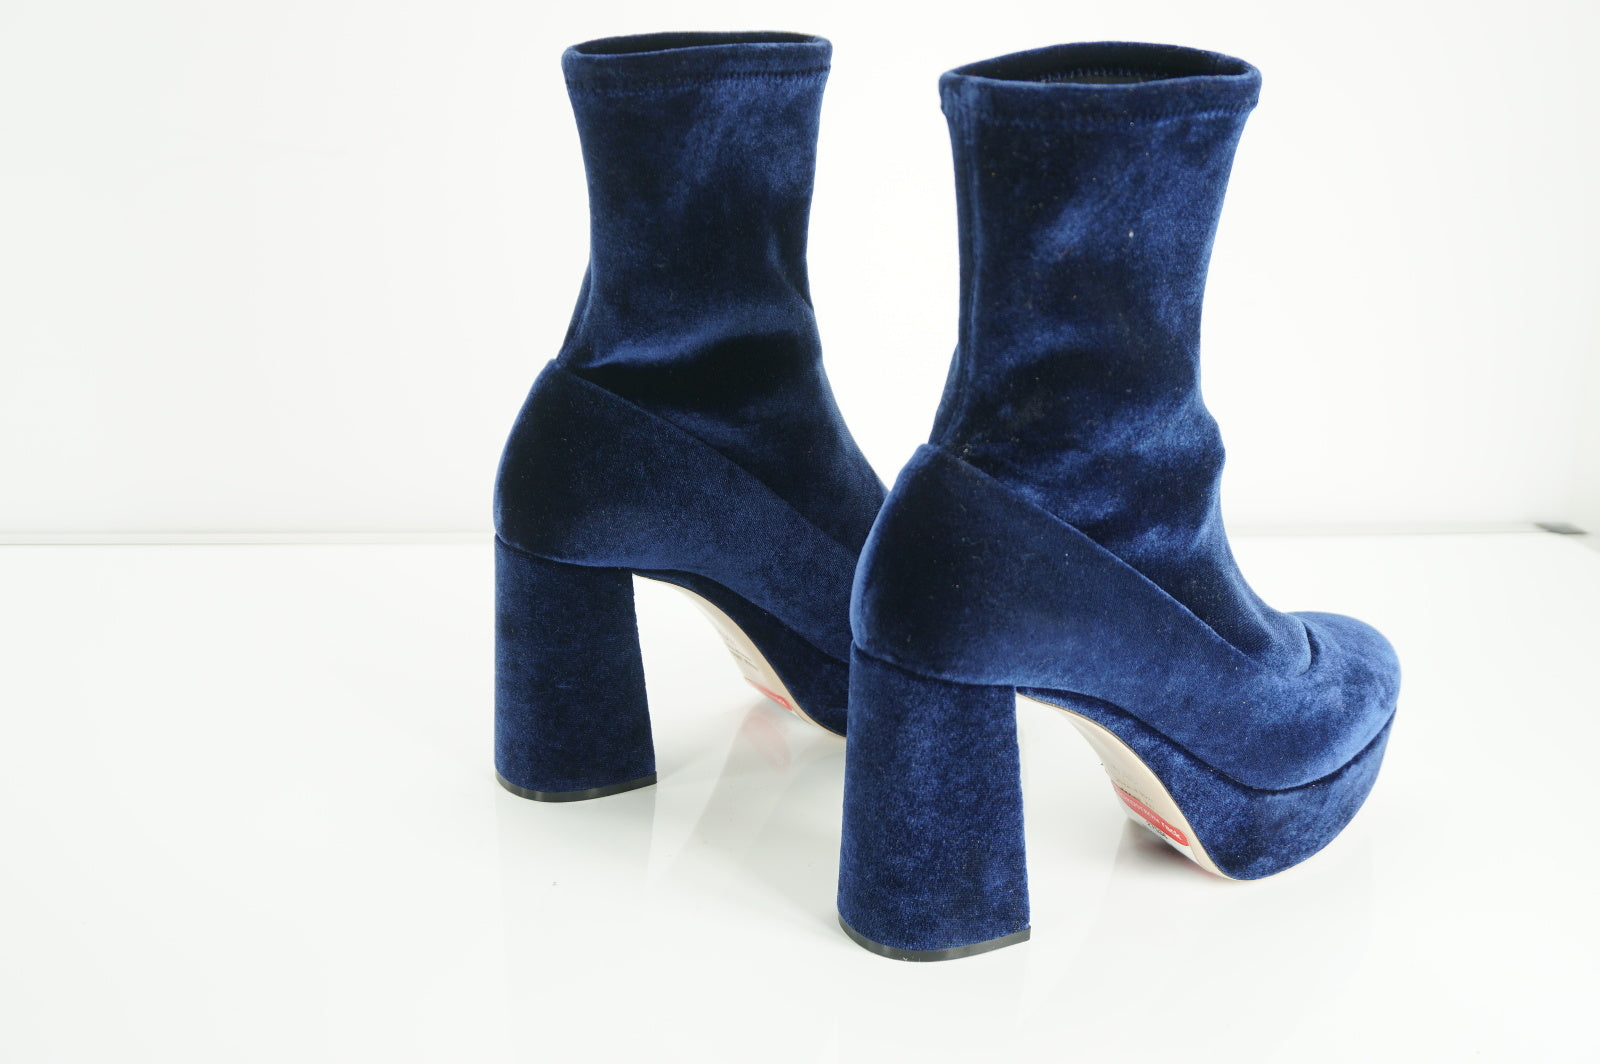 Miu Miu Blue Velvet Stretch Block Heel Platform Ankle Boots Size 35.5 $890